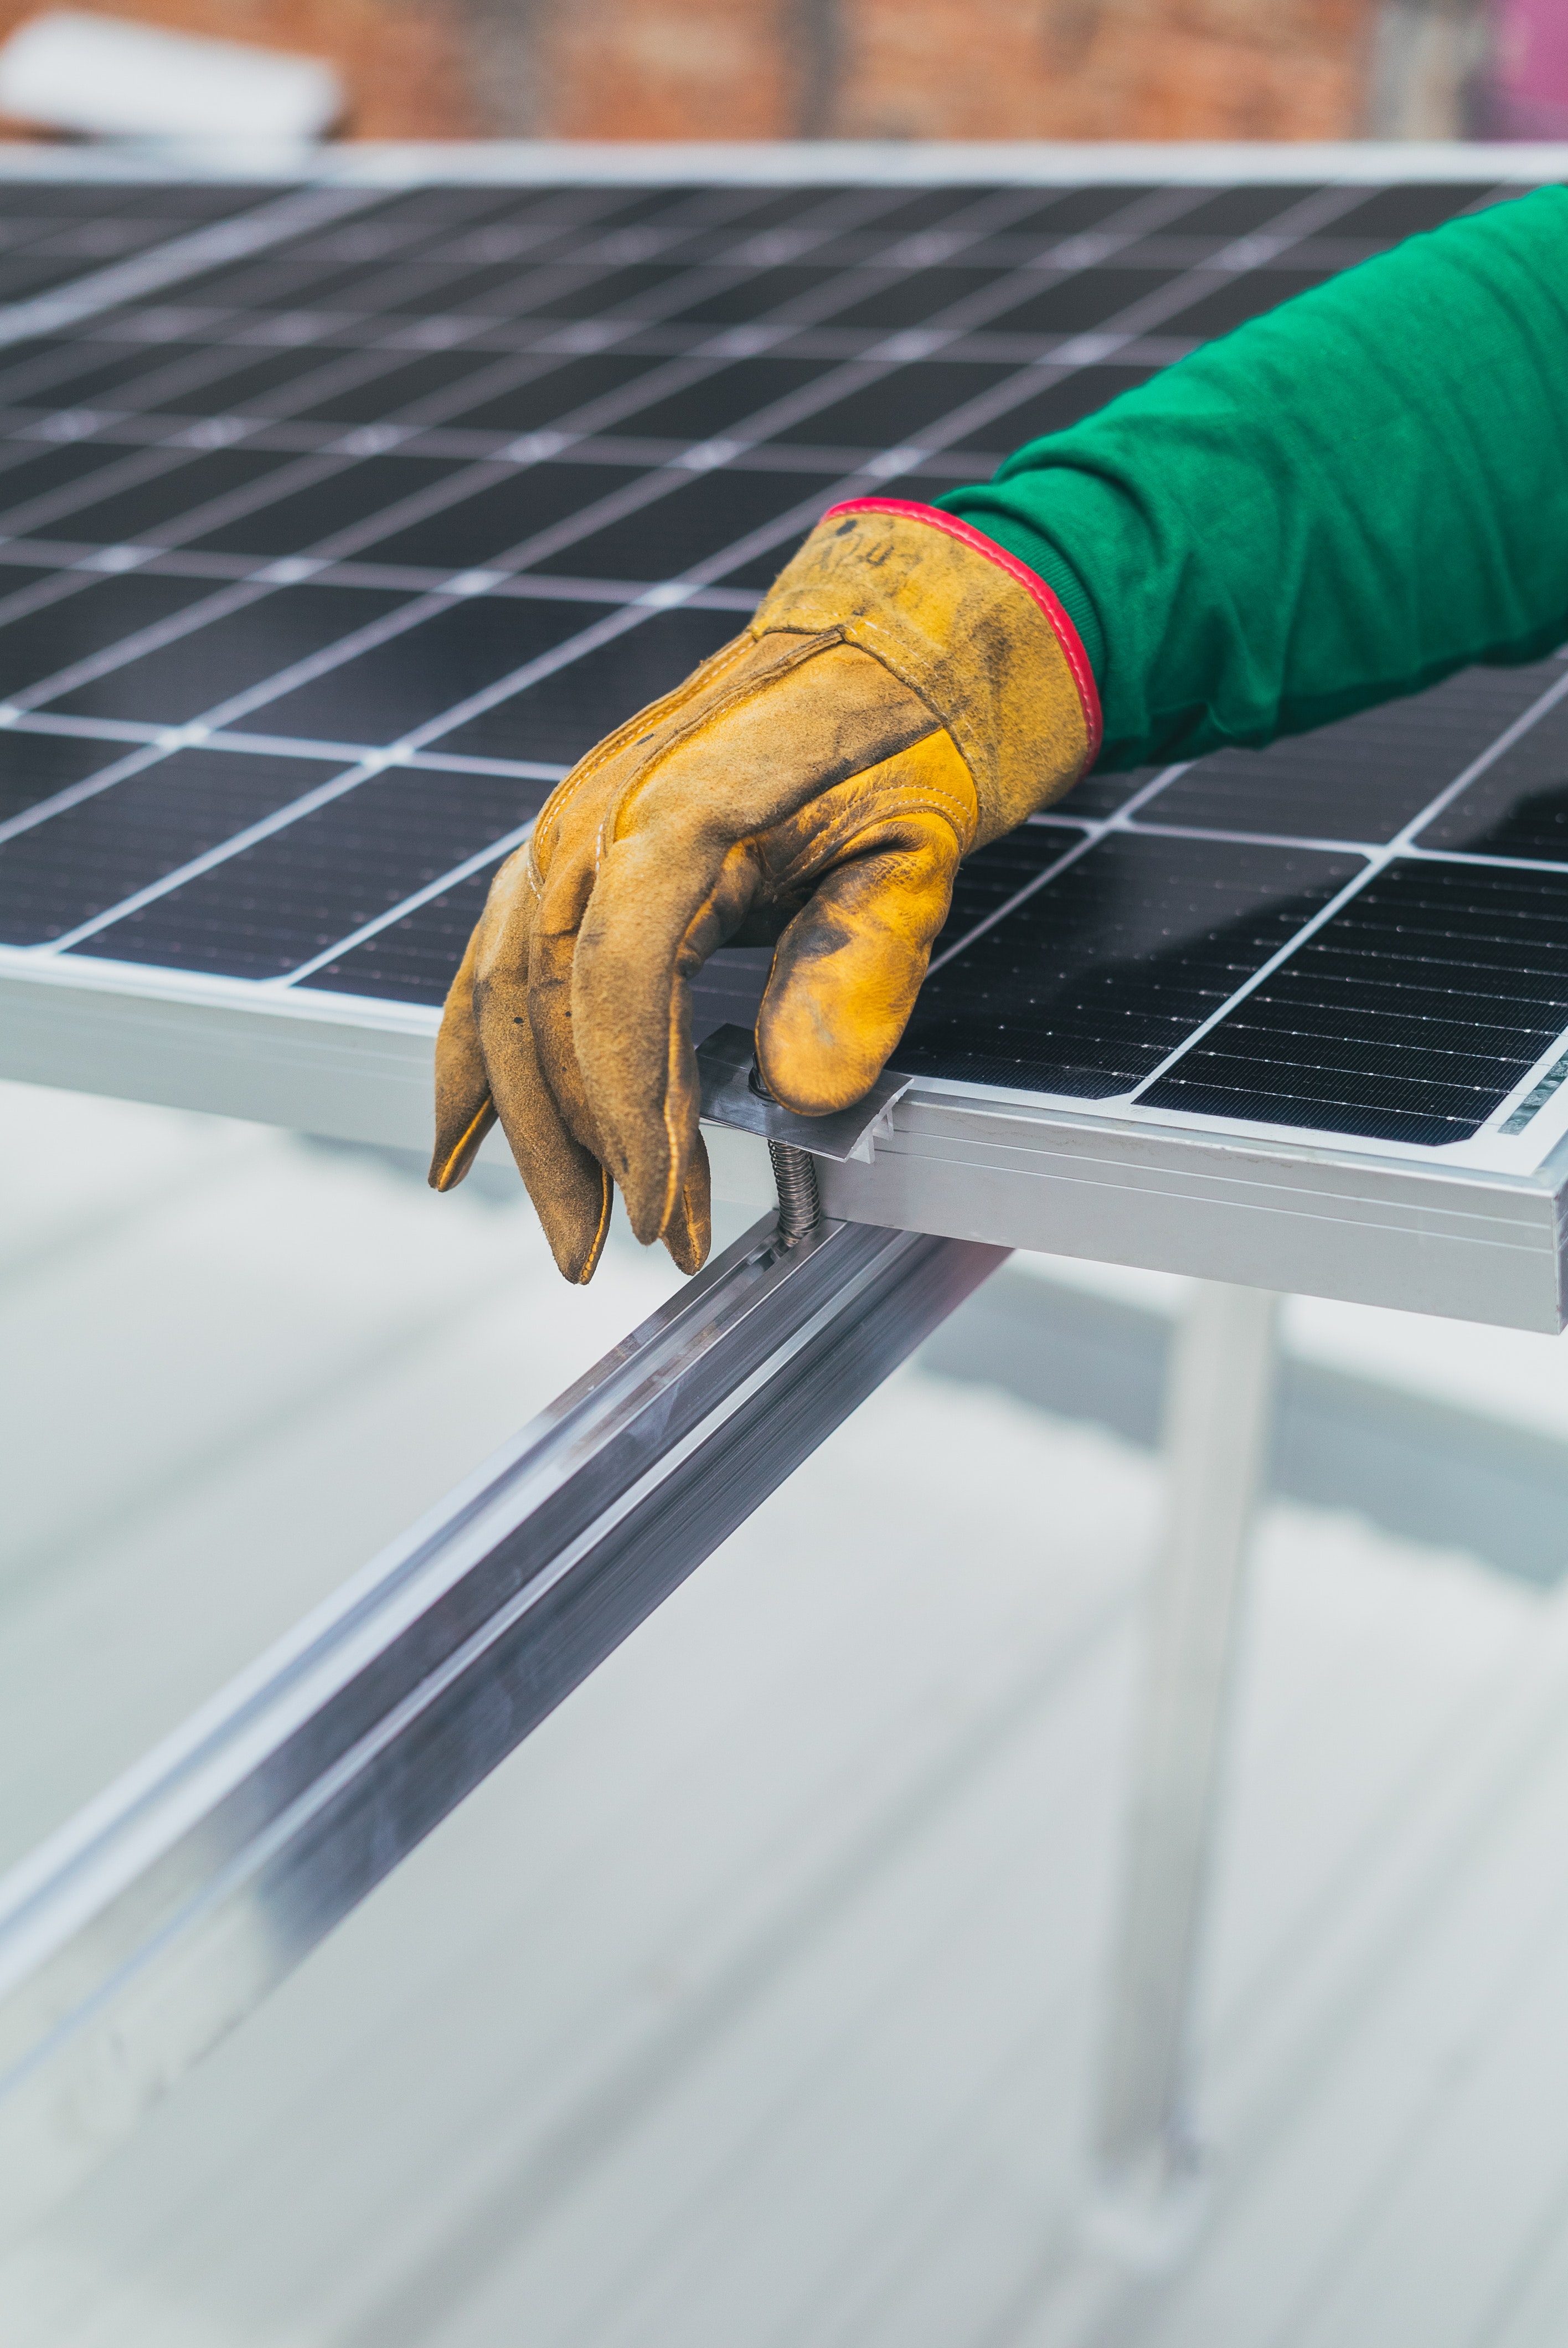 Empreendedor, a energia solar ampliará a lucratividade do seu negócio